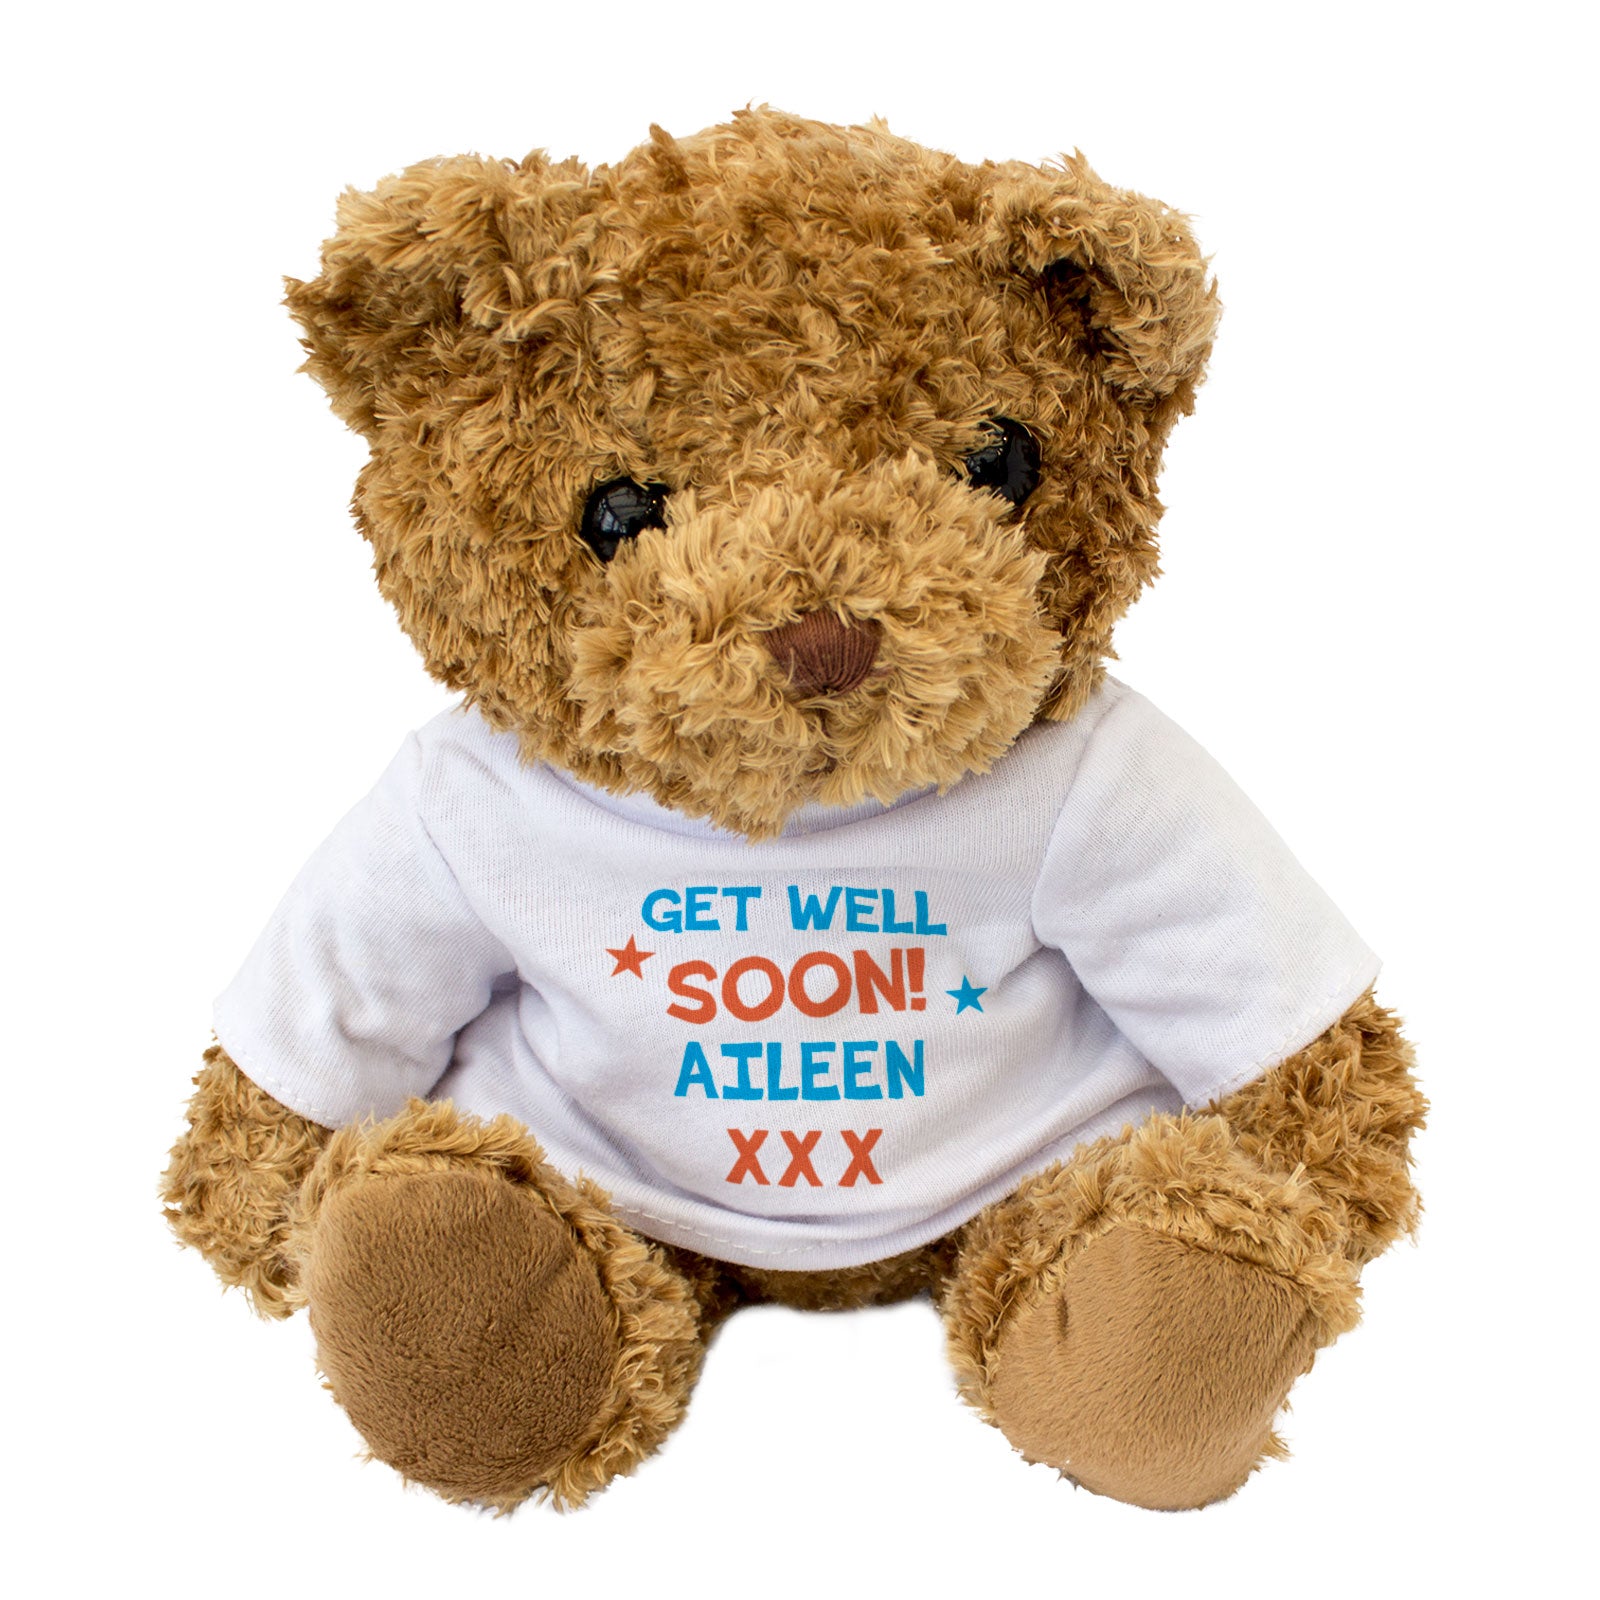 Get Well Soon Aileen - Teddy Bear